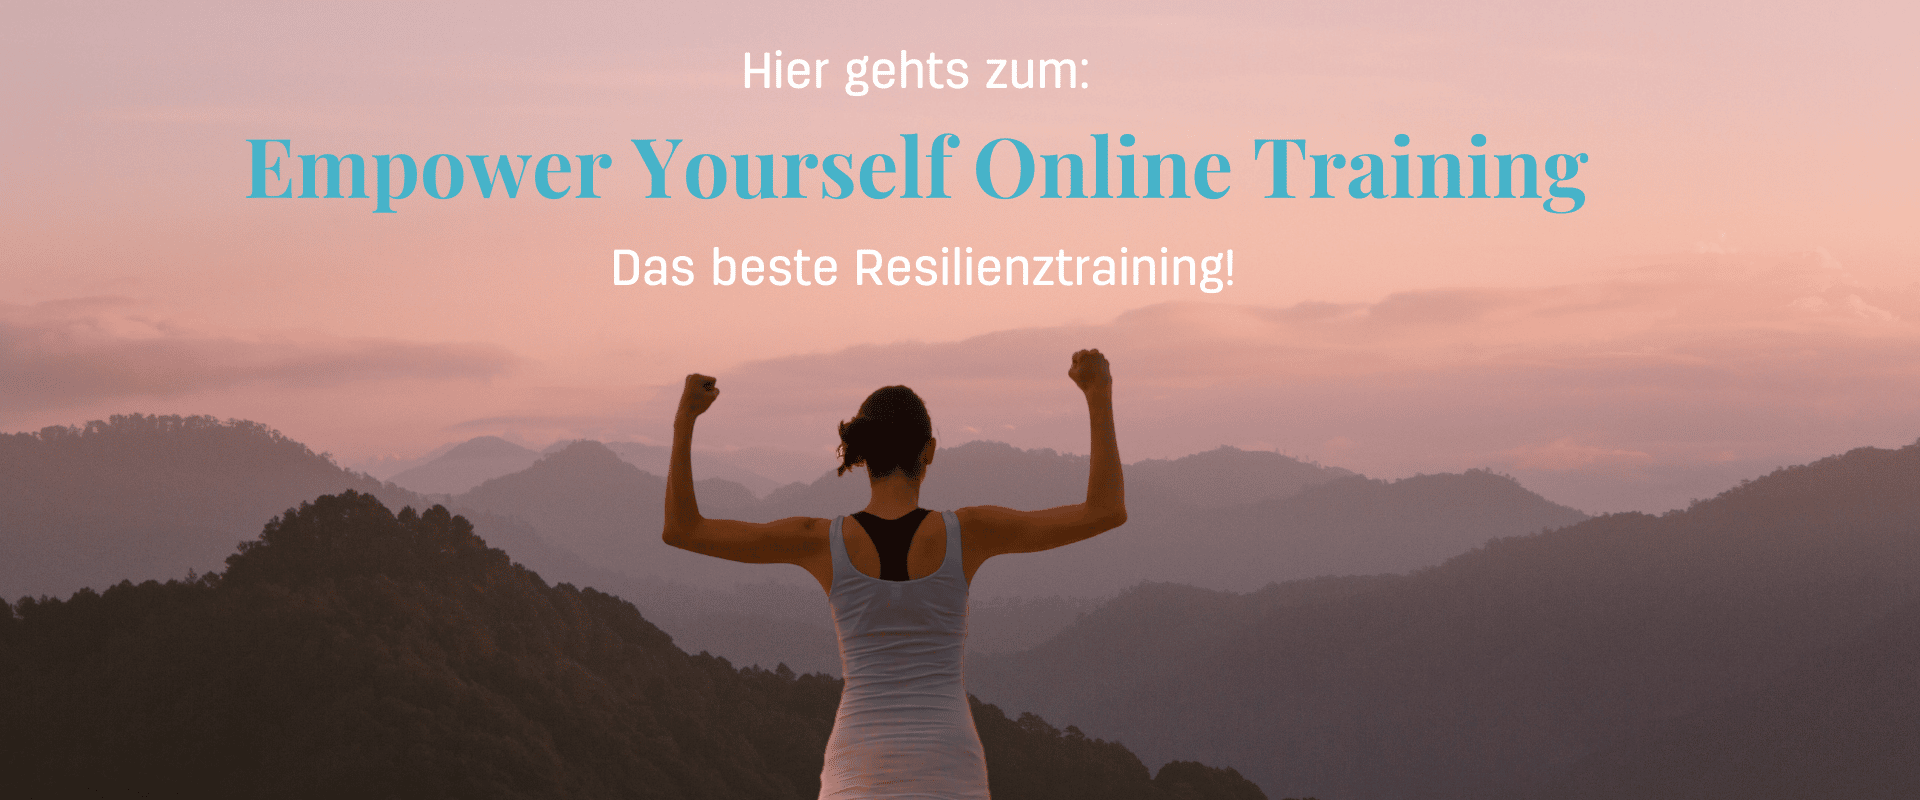 Empower Yourself Online Training